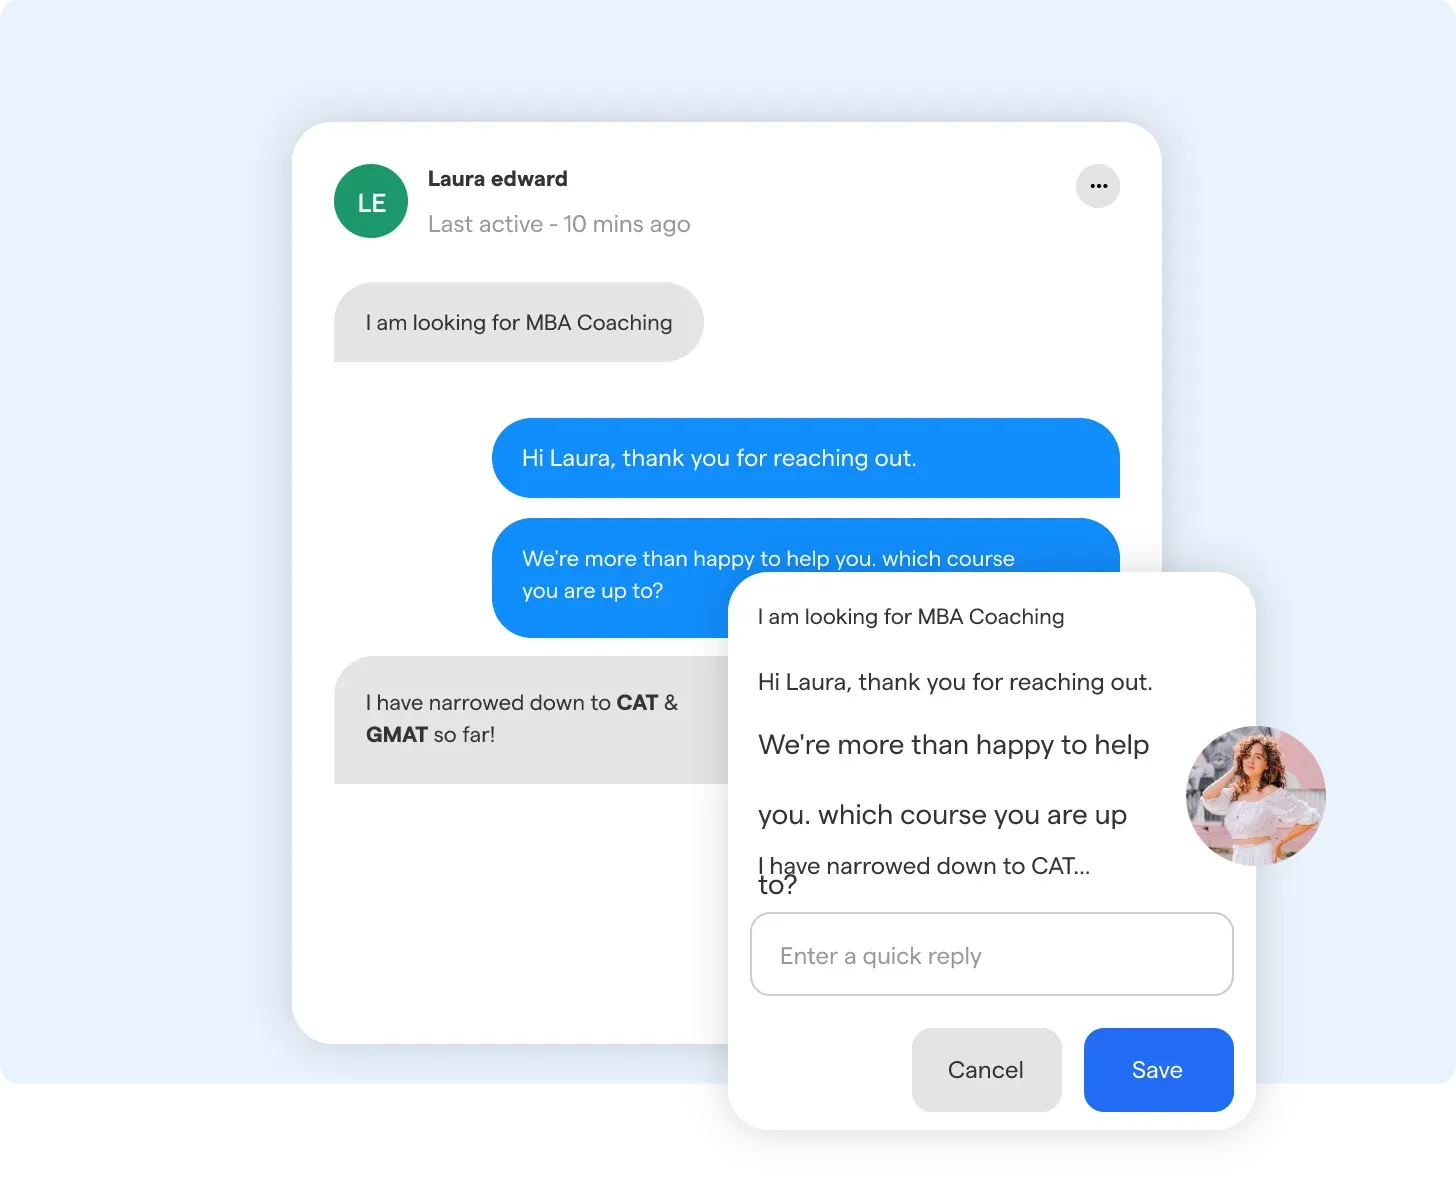 Efficient Customer Support through chatbots